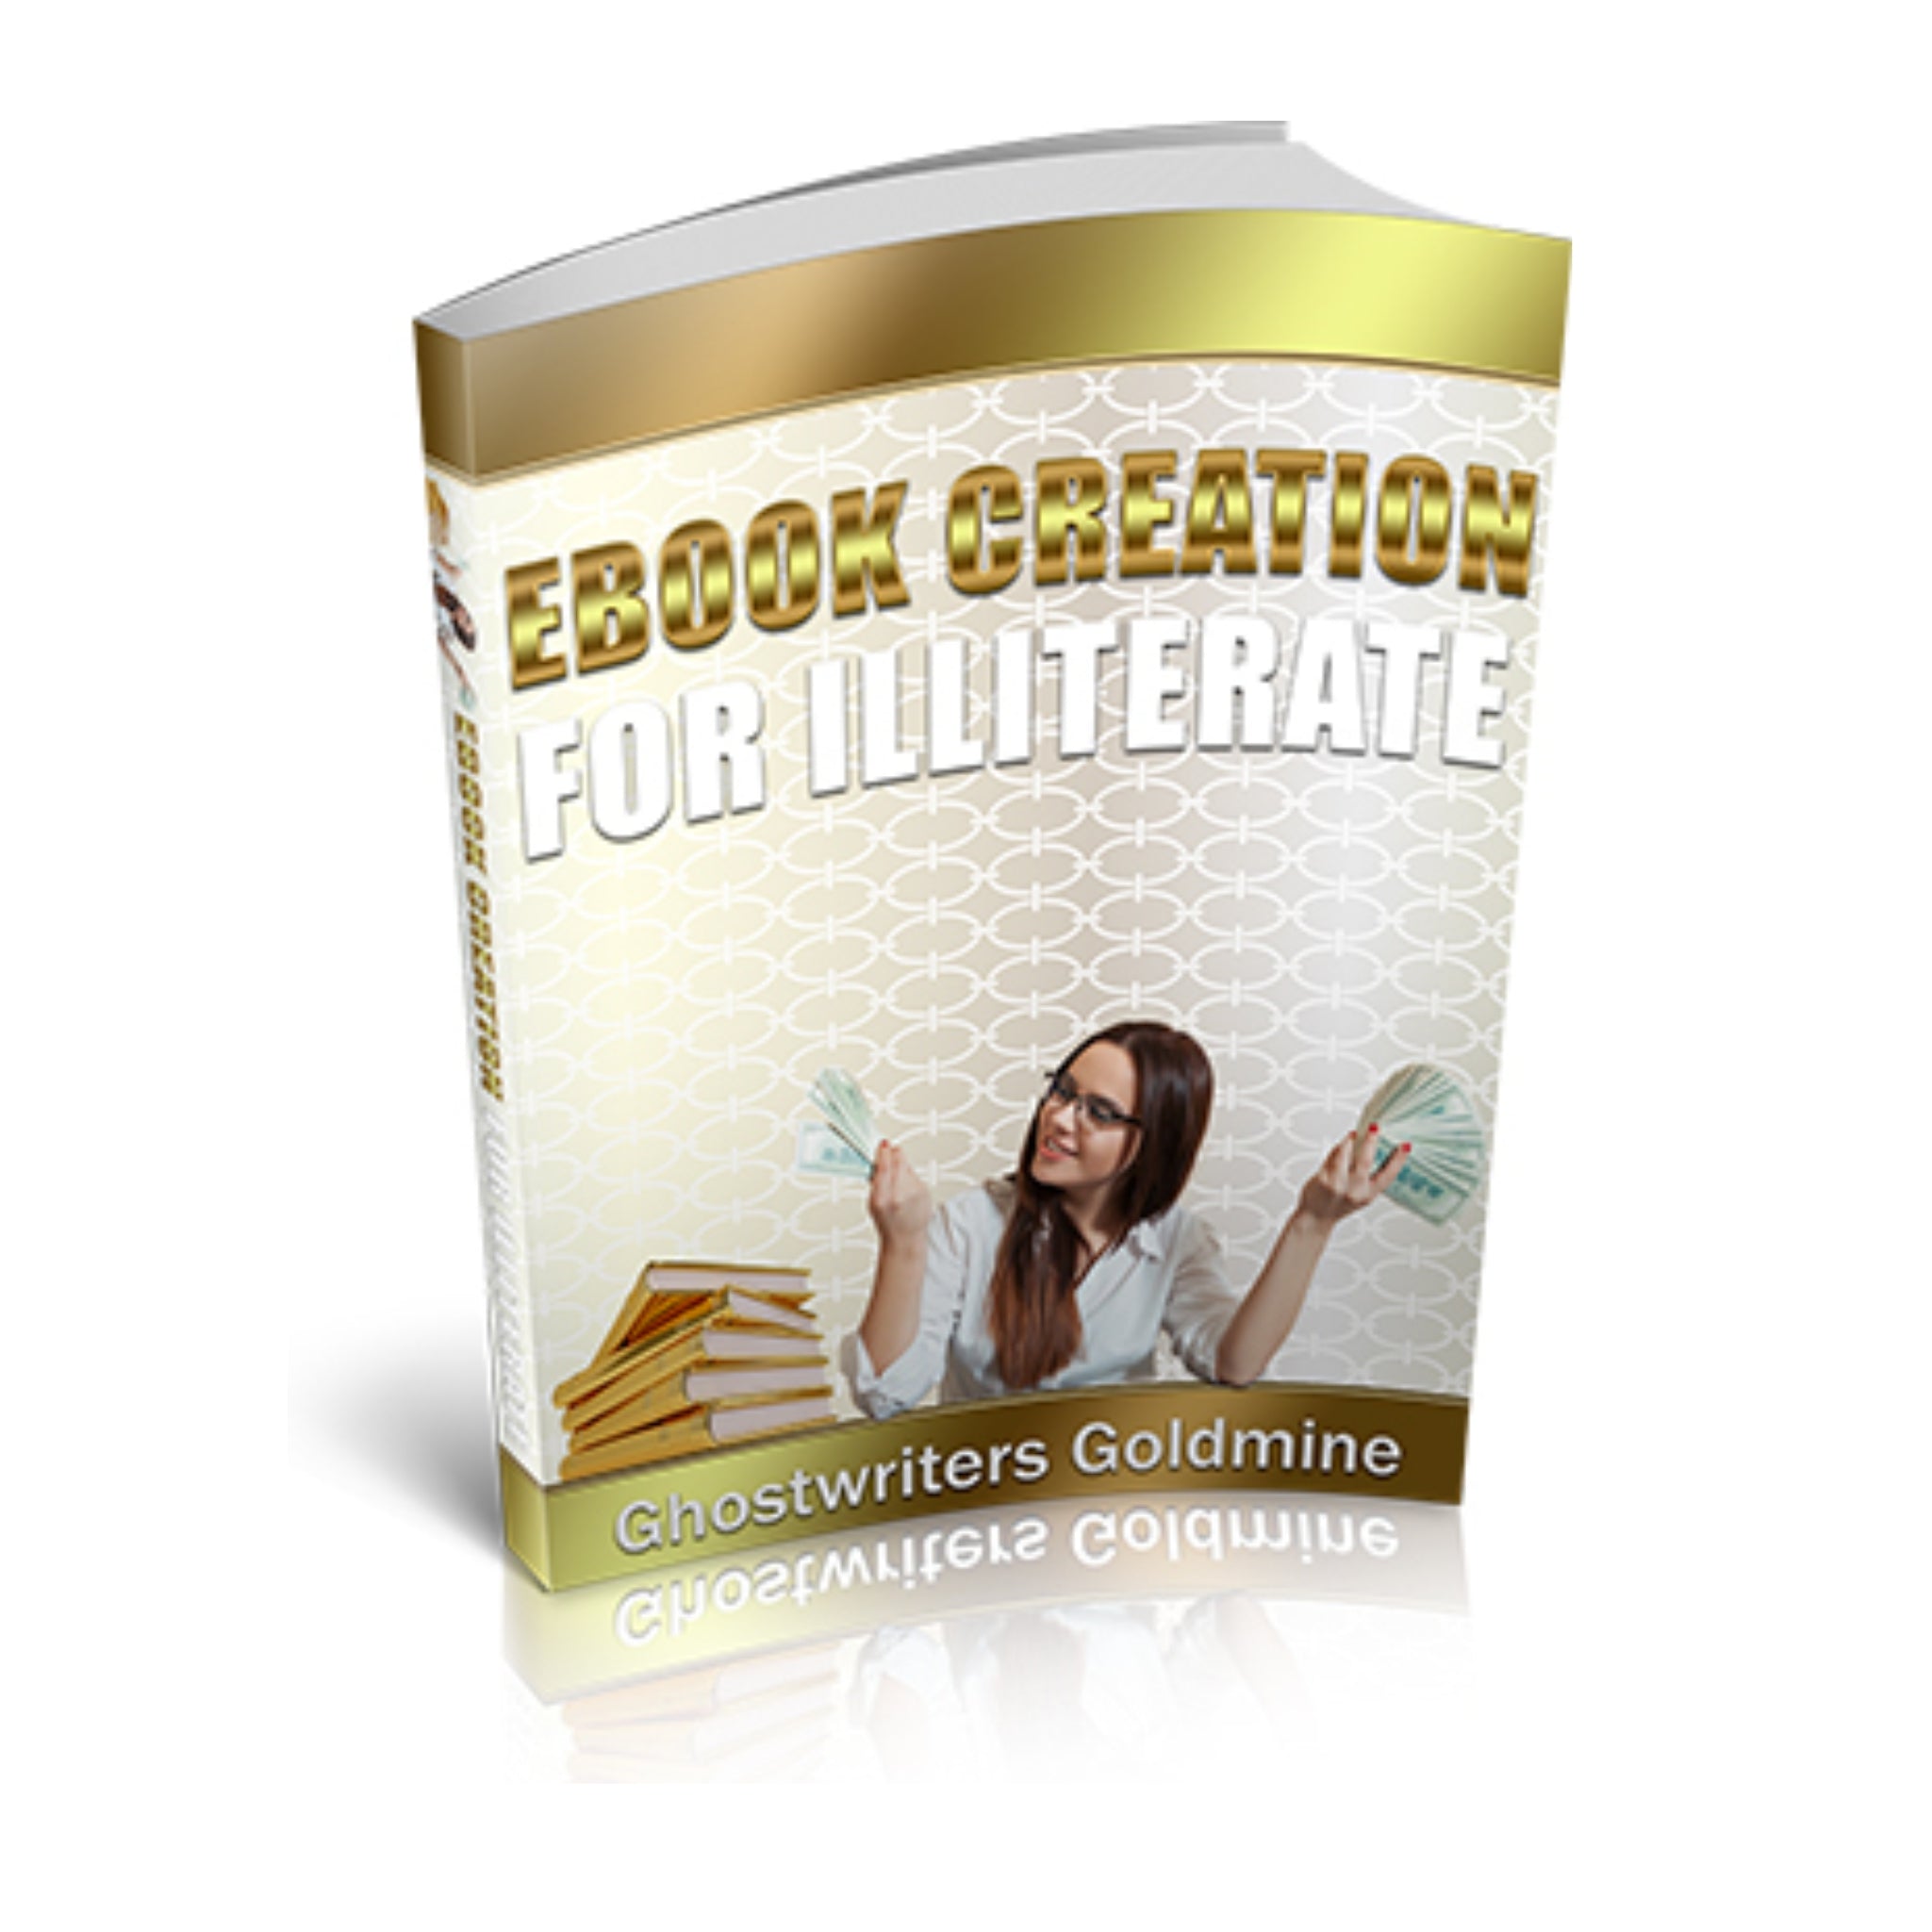 Ebook Creation For Illiterate Ebook